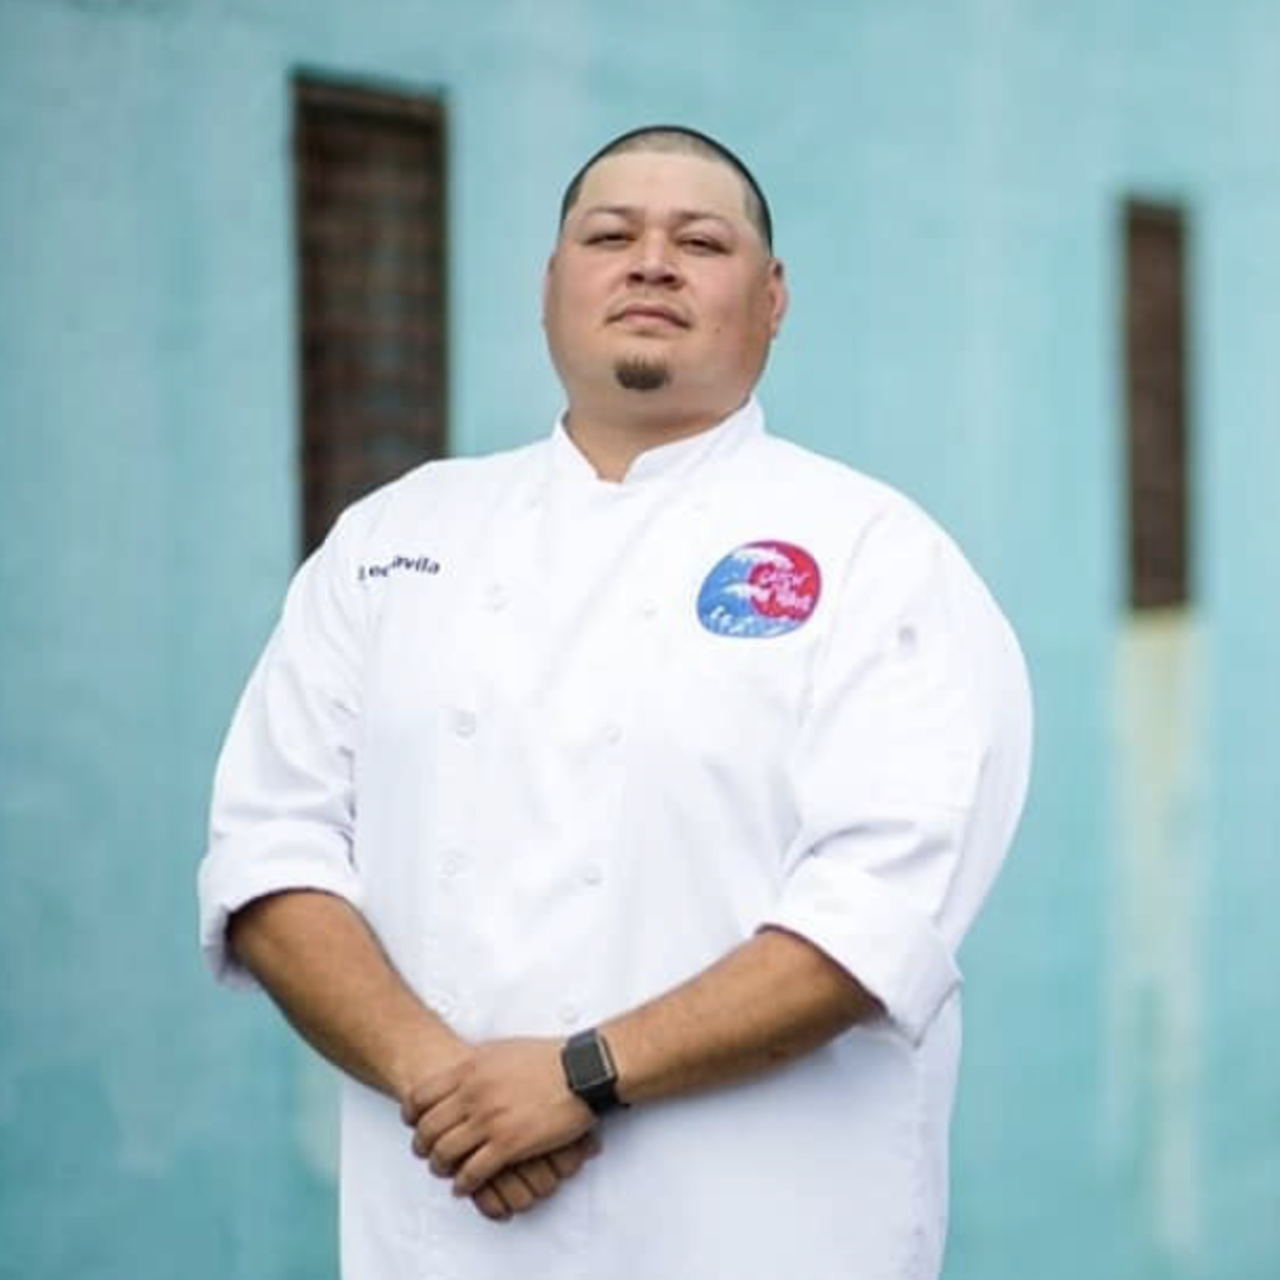 Leo Davila, Chef/Owner of Catch the Wave
facebook.com/catchthewave.io/
Photo via Instagram / sangriaontheburg